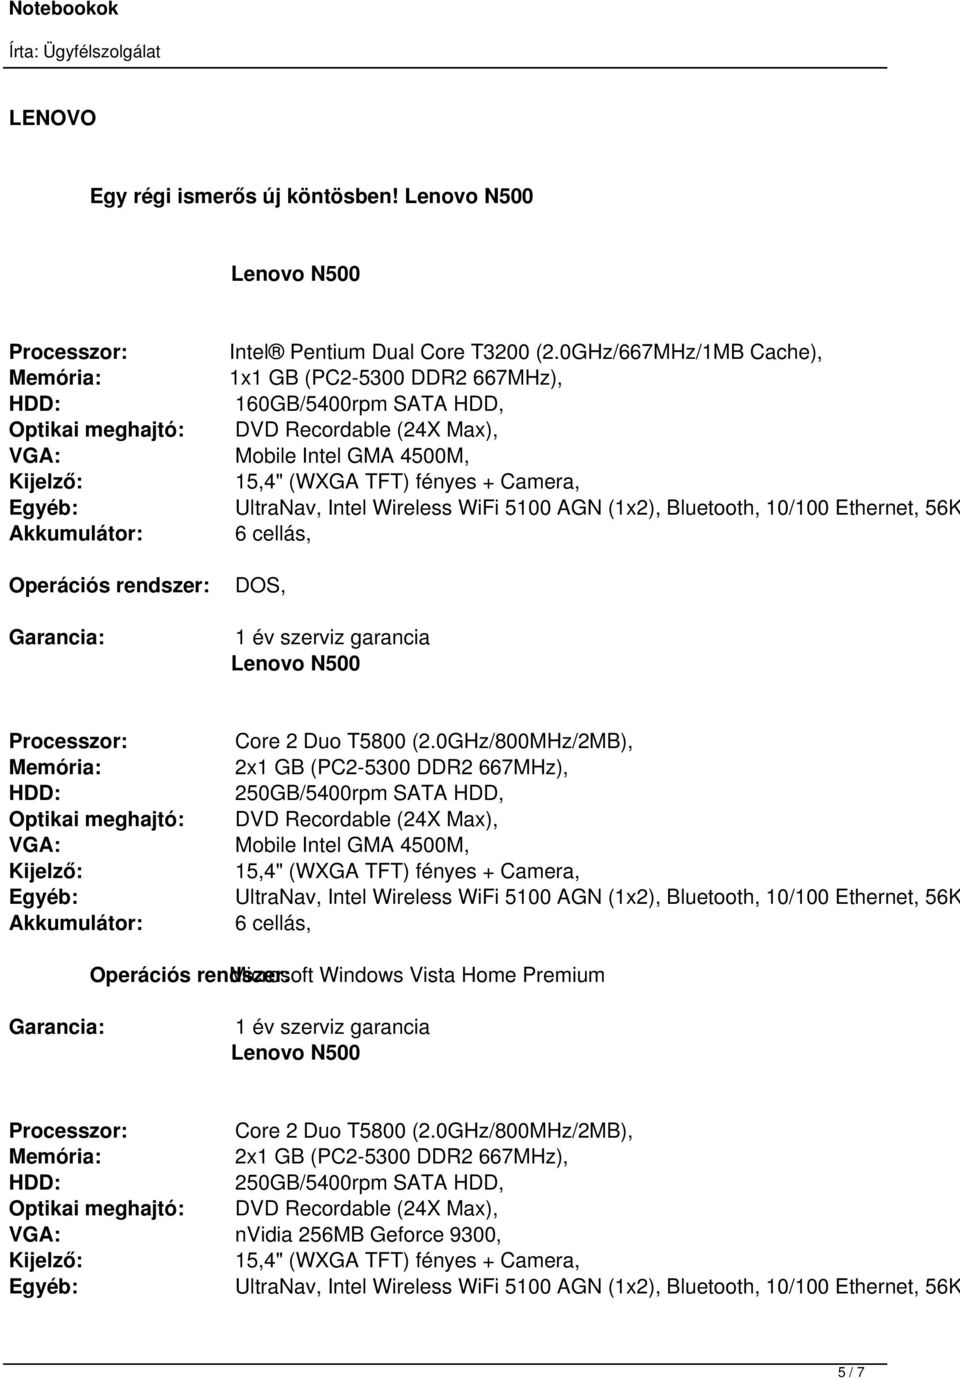 Intel Wireless WiFi 5100 AGN (1x2), Bluetooth, 10/100 Ethernet, 56K Operációs rendszer: DOS, Lenovo N500 Processzor: Core 2 Duo T5800 (2.